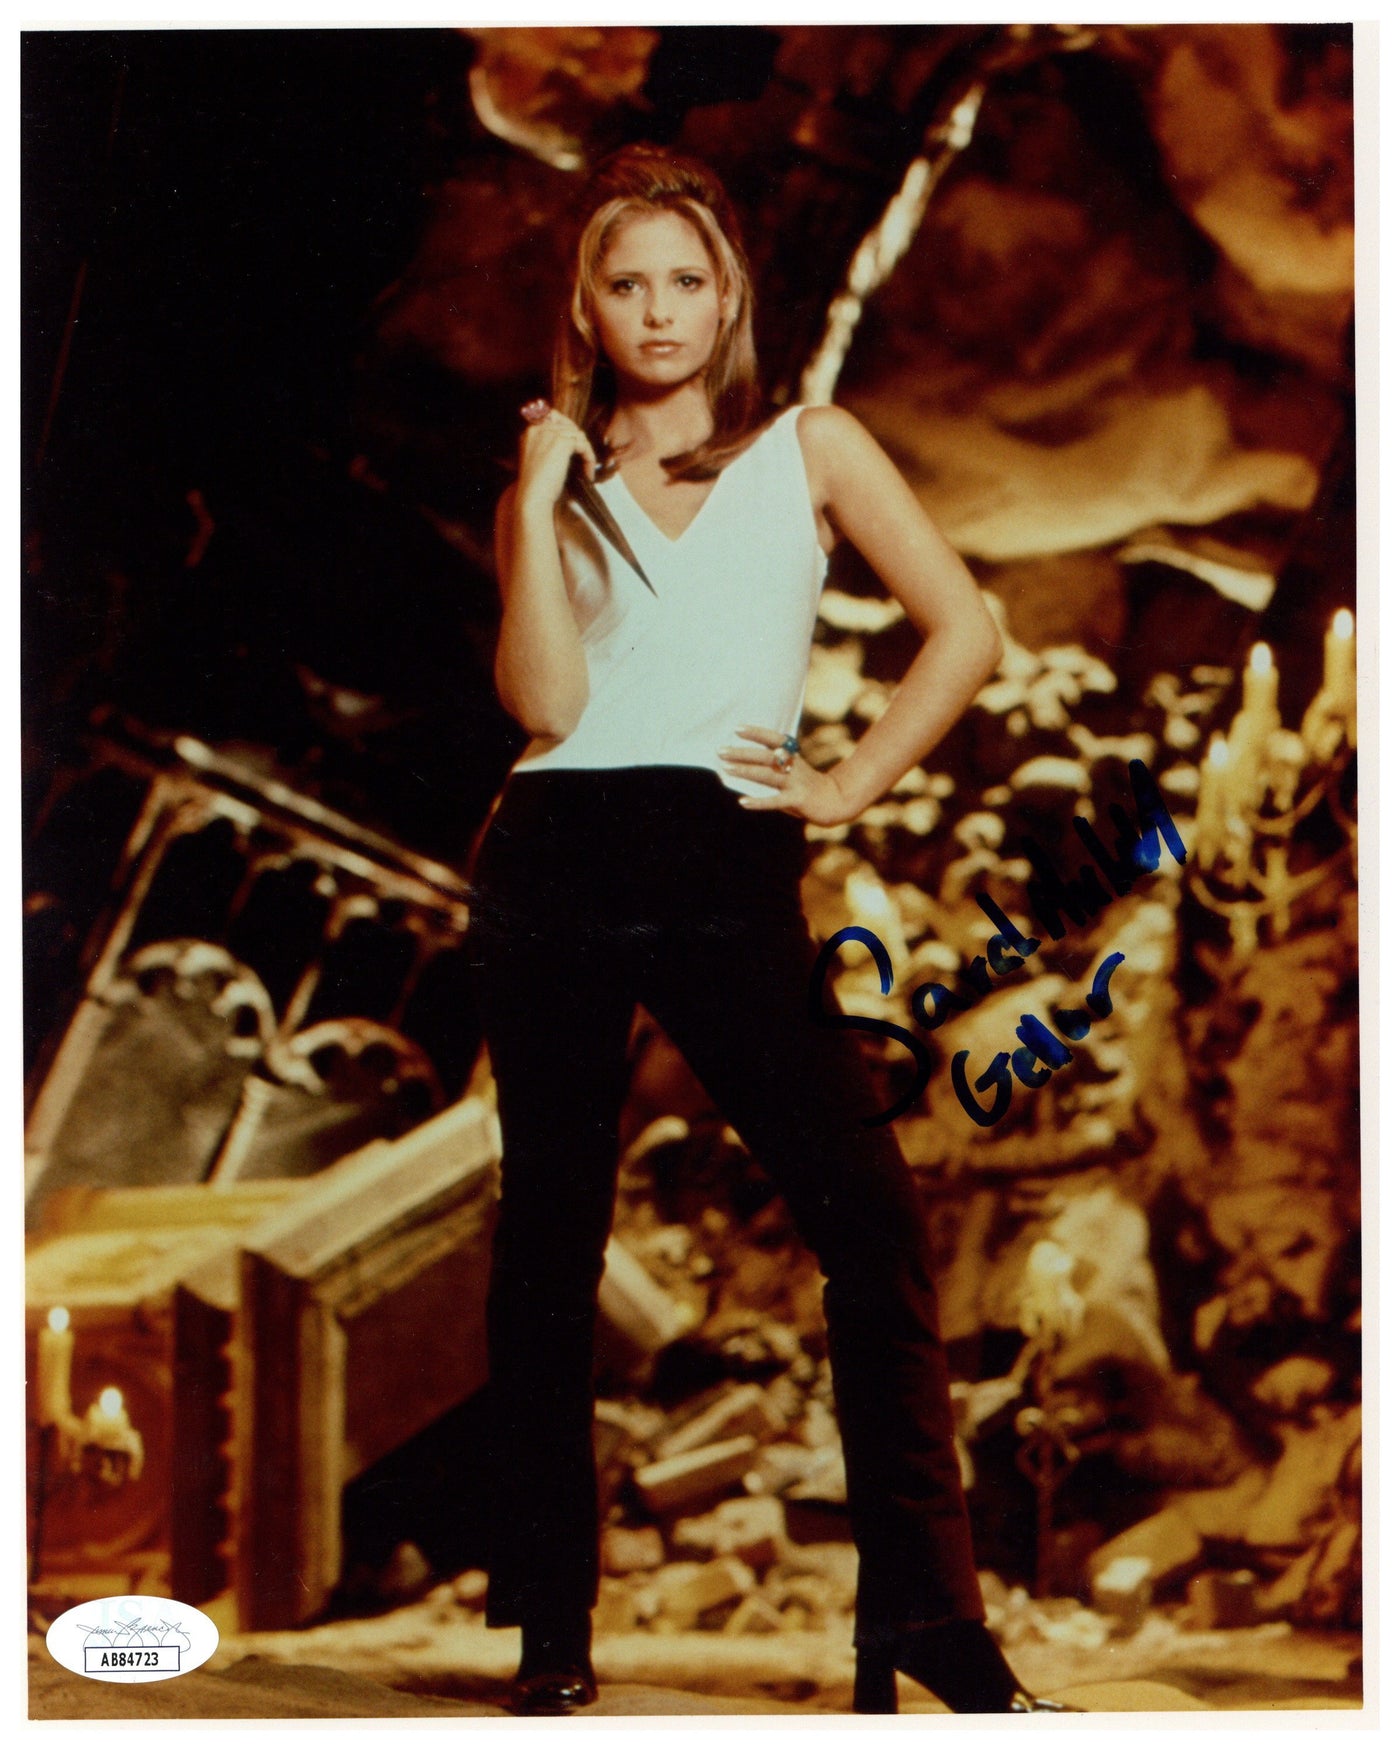 Sarah Michelle Gellar Signed 8x10 Photo Buffy Authentic Autographed JSA COA